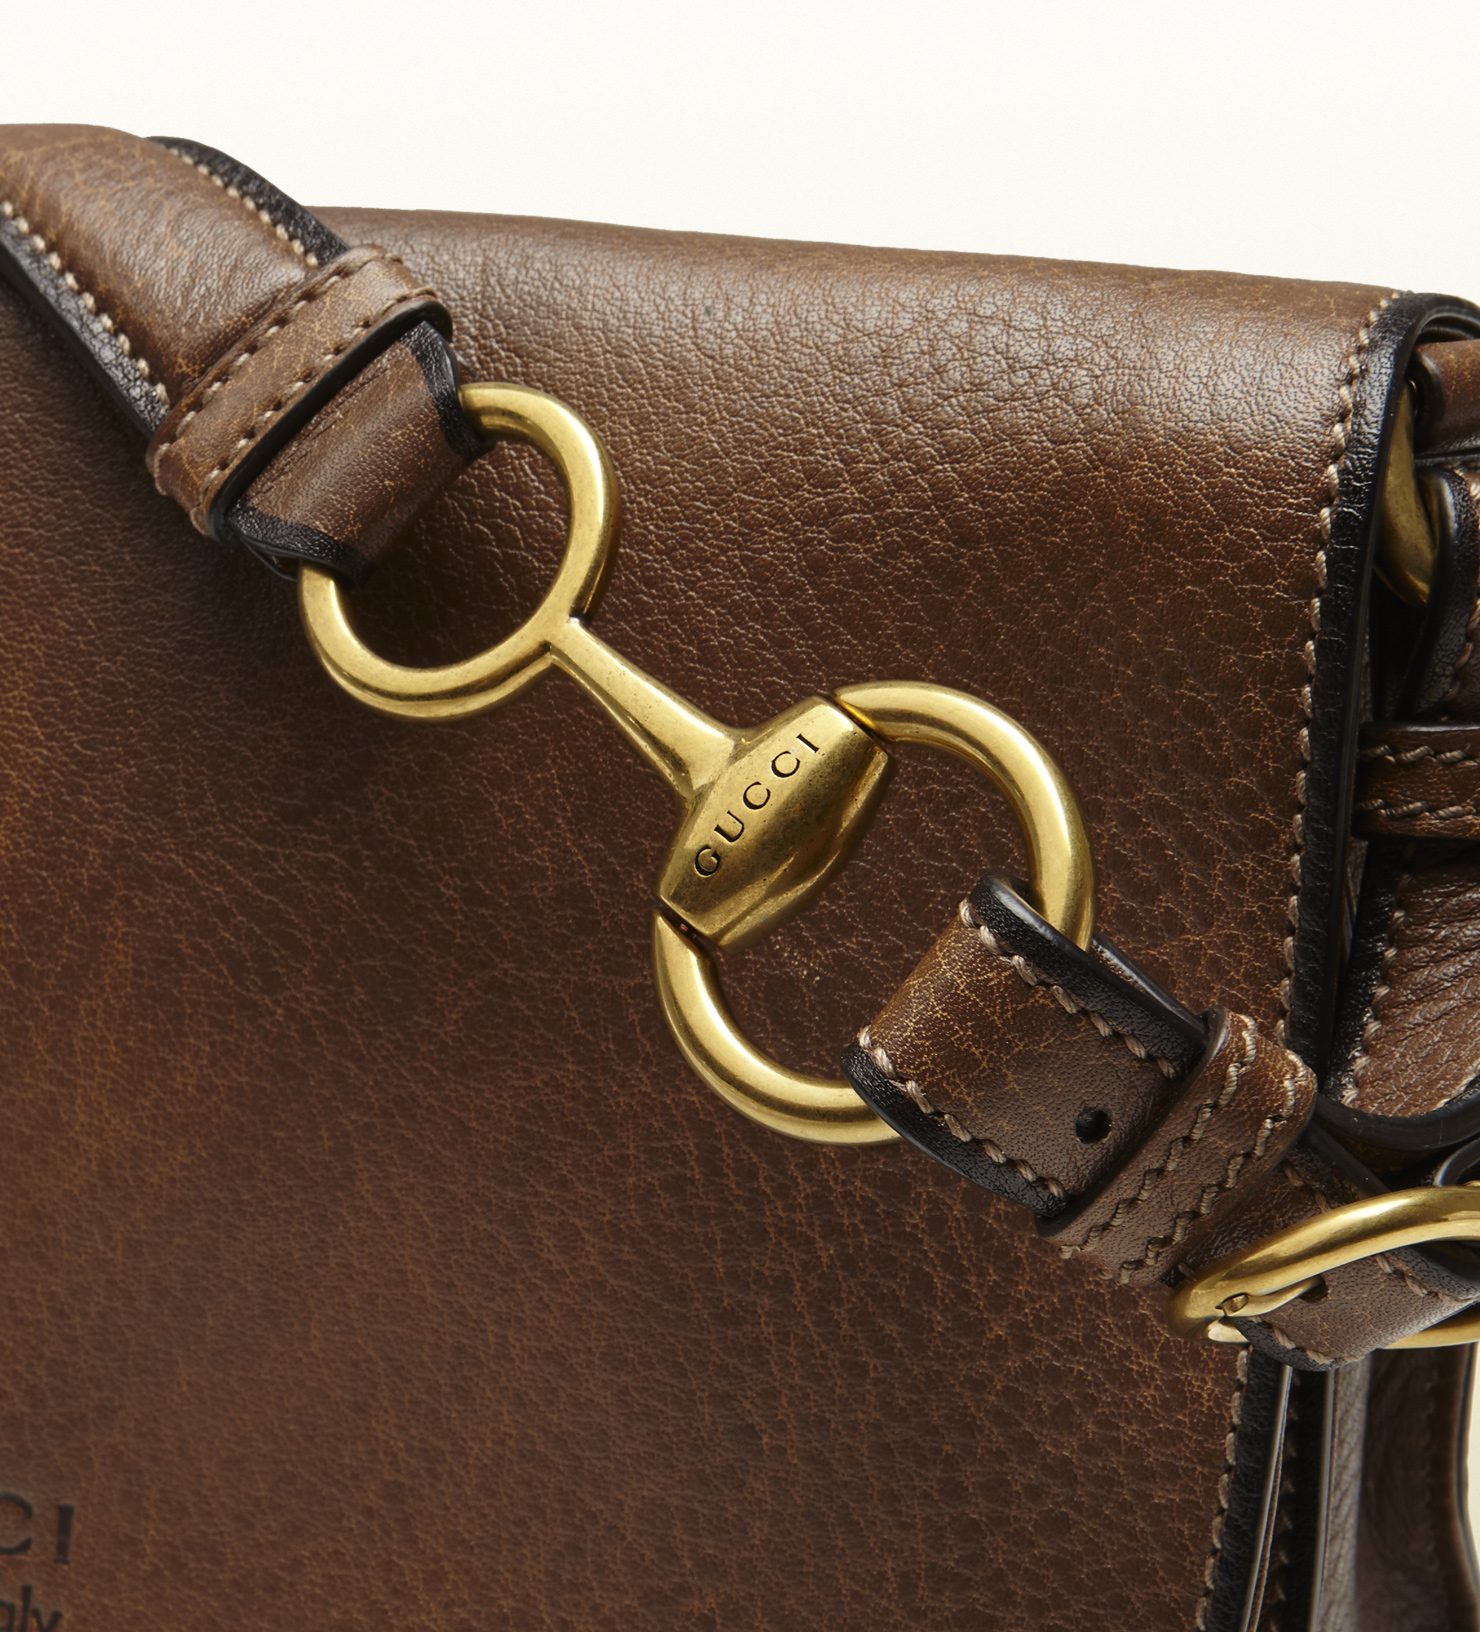 Gucci Harness Leather Shoulder Bag in Brown for Men - Lyst